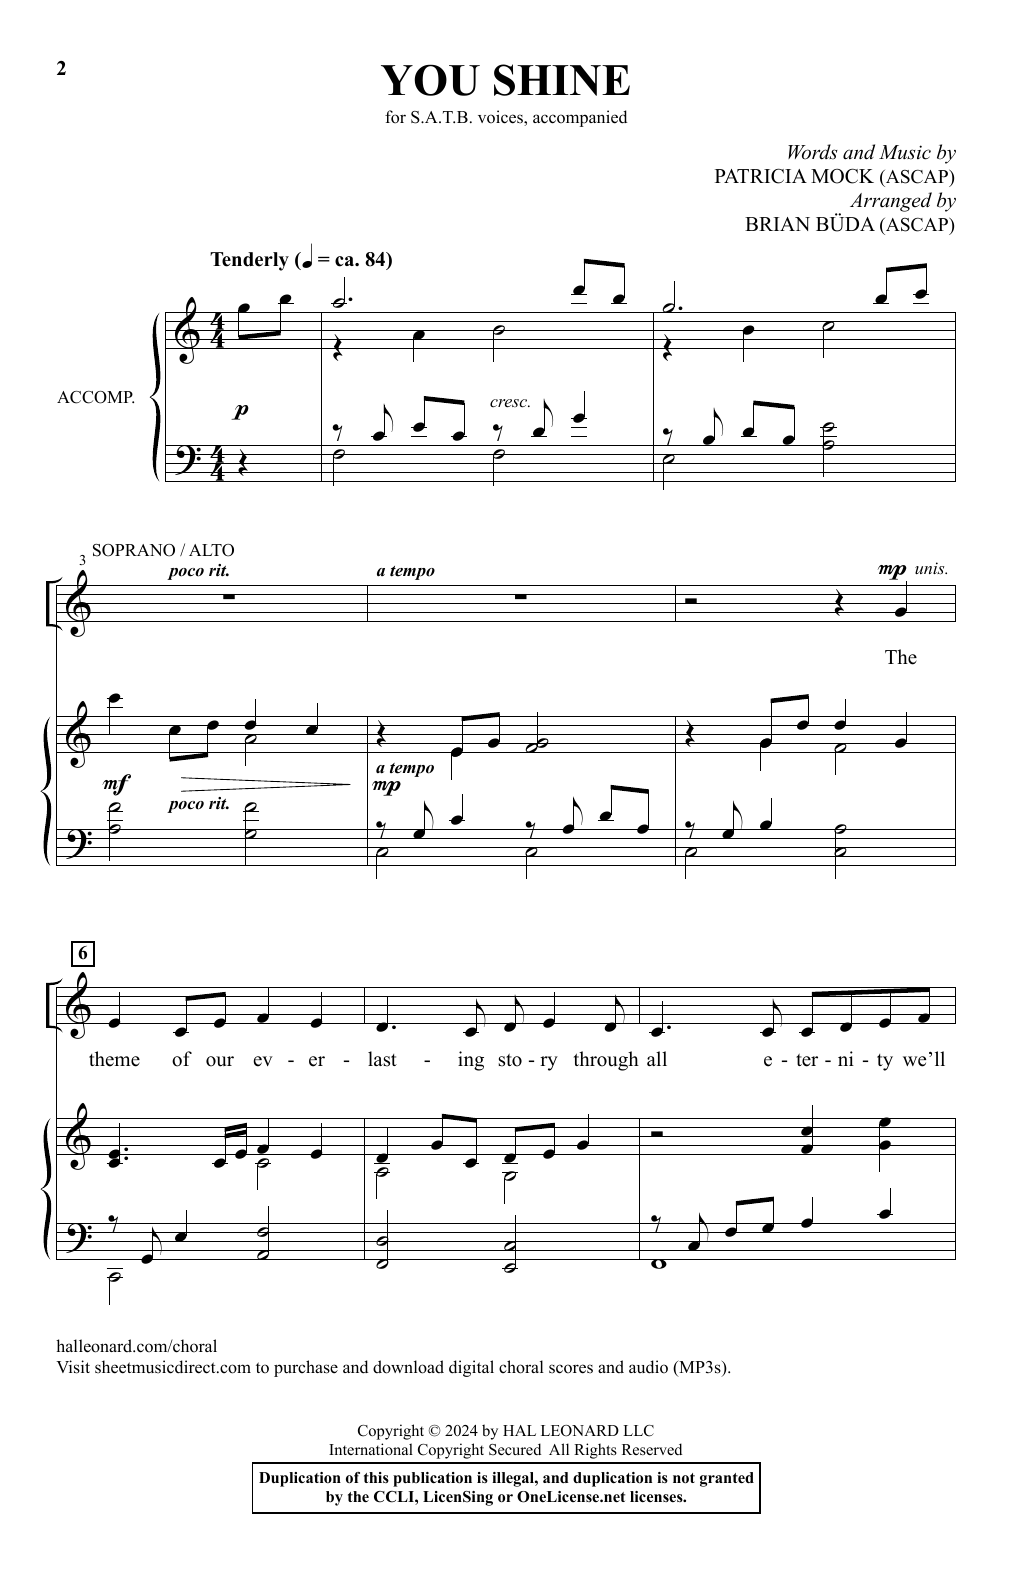 Patricia Mock You Shine (arr. Brian Büda) Sheet Music Notes & Chords for SATB Choir - Download or Print PDF